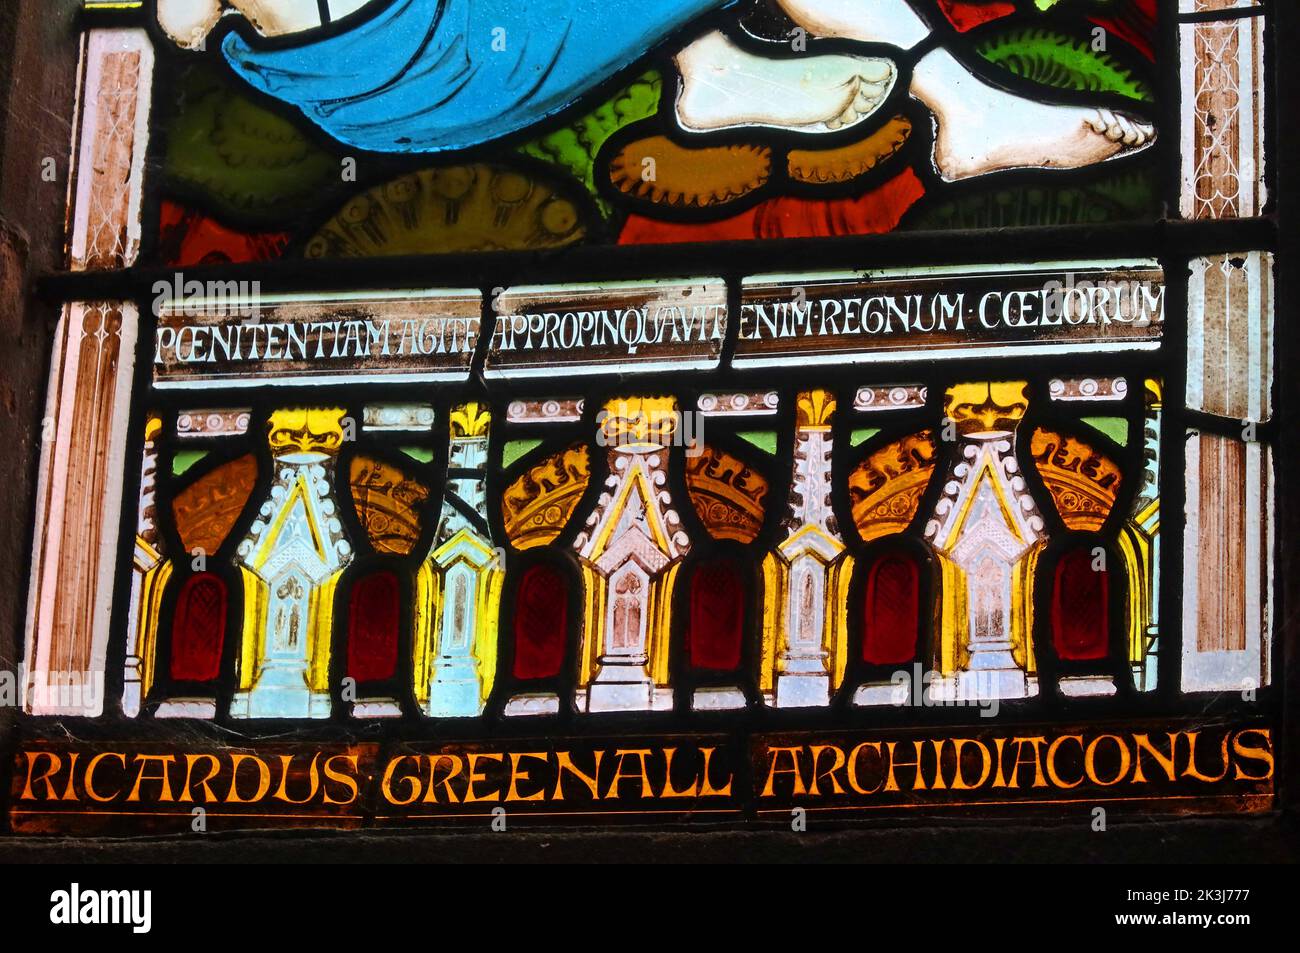 Ricardus Greenall,Archidiaconus Cestrensis,South wall ,John The baptist window, at St Thomas, Stockton Heath, Warrington, Cheshire,England,UK,WA4 6HJ Stock Photo